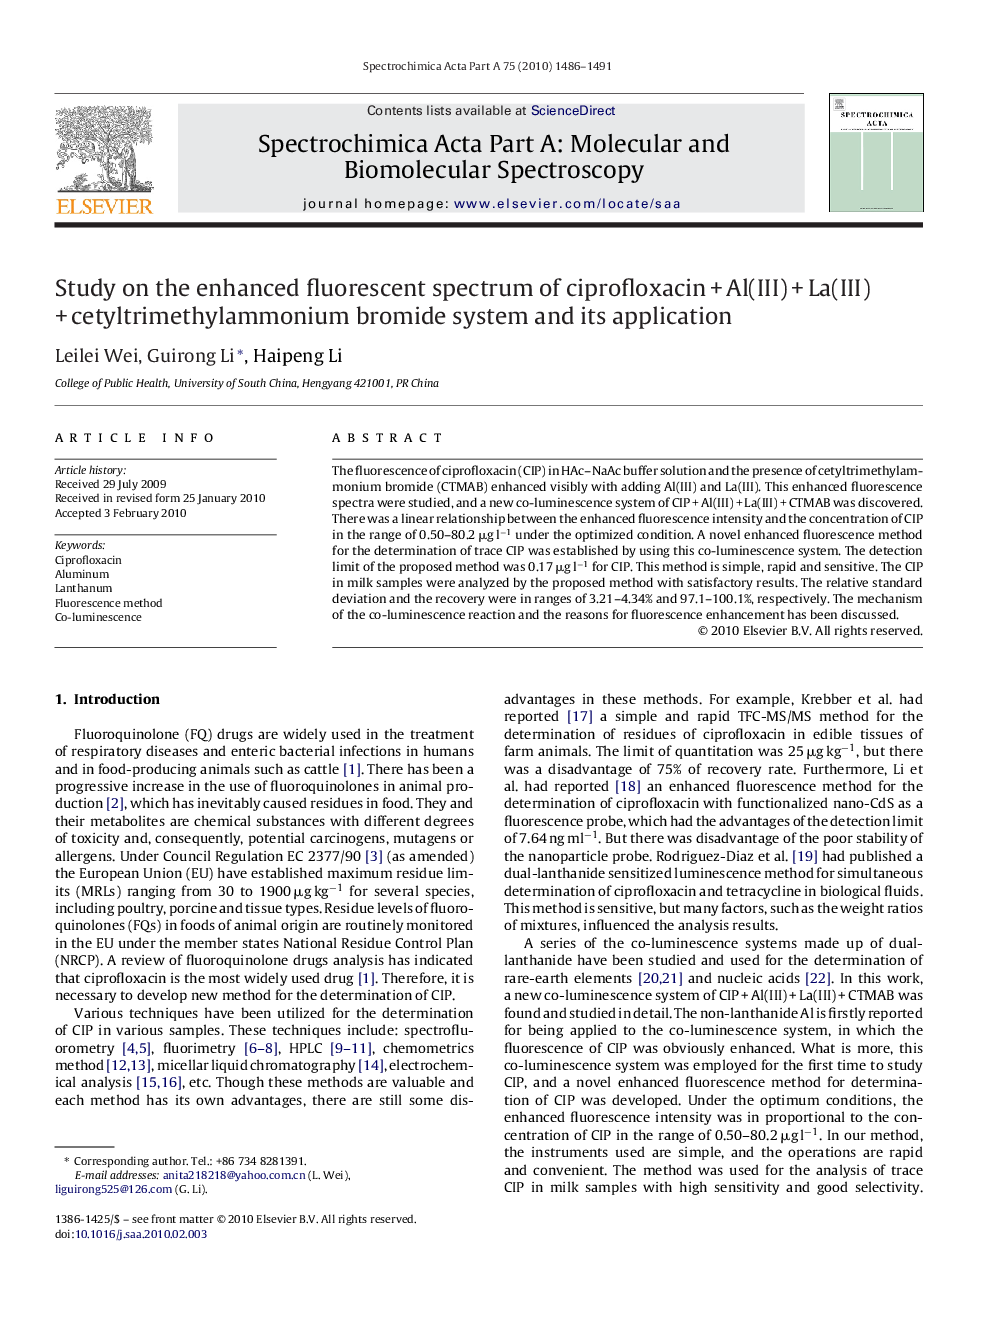 Study on the enhanced fluorescent spectrum of ciprofloxacin + Al(III) + La(III) + cetyltrimethylammonium bromide system and its application